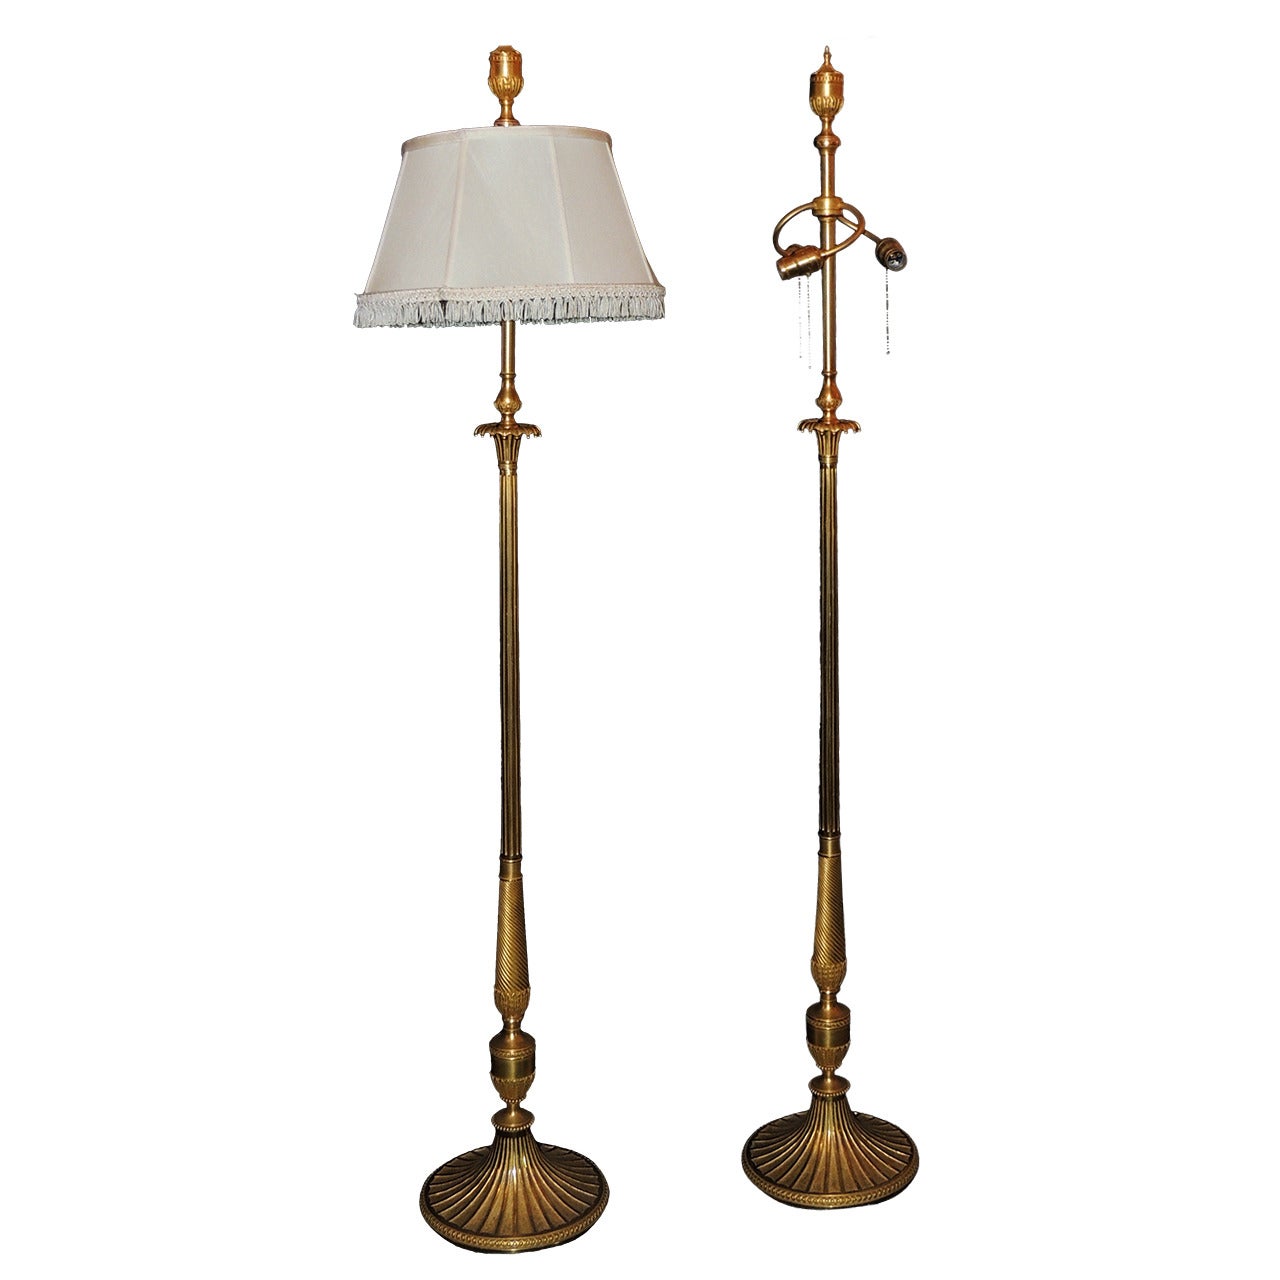 Very Fine and Elegant Pair of Caldwell Doré Bronze Three-Light Floor Lamps